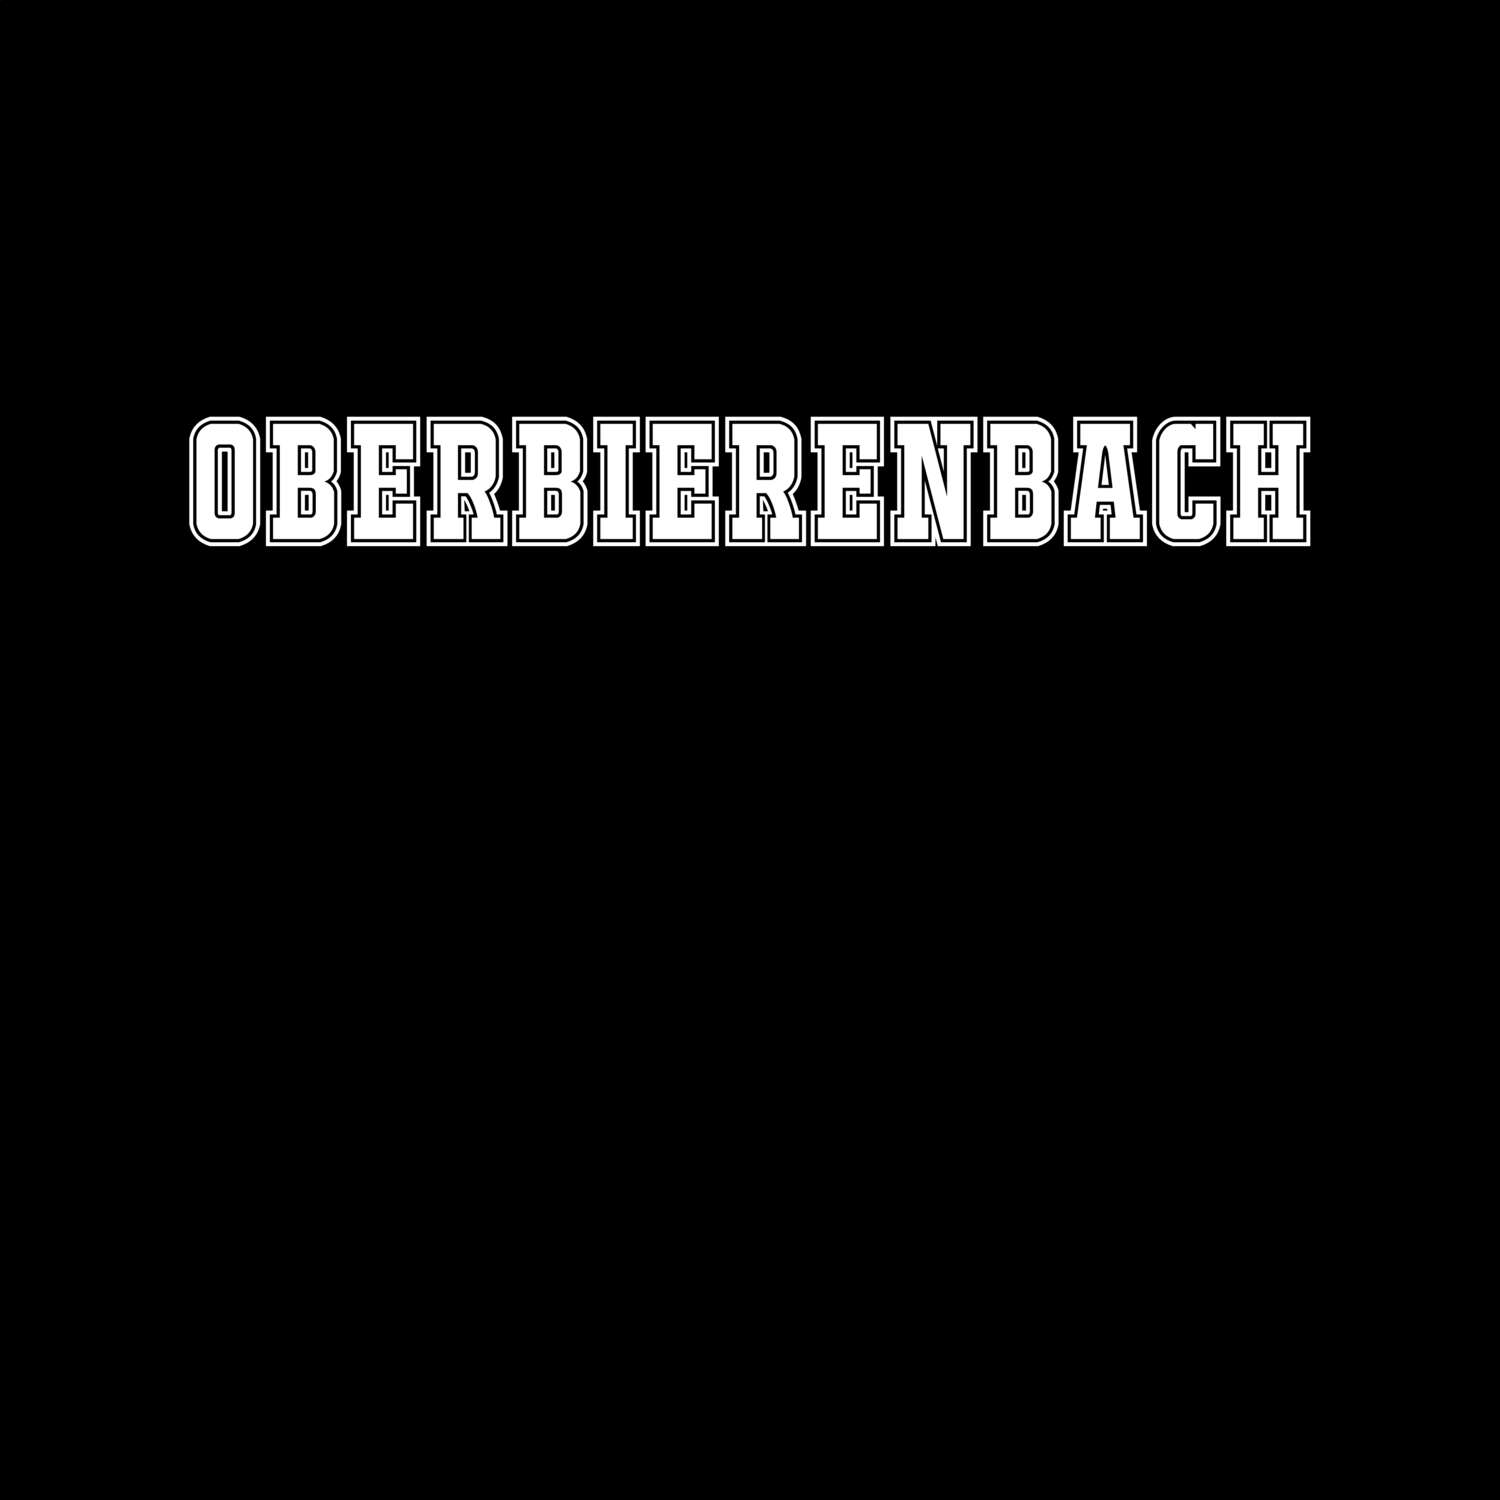 Oberbierenbach T-Shirt »Classic«